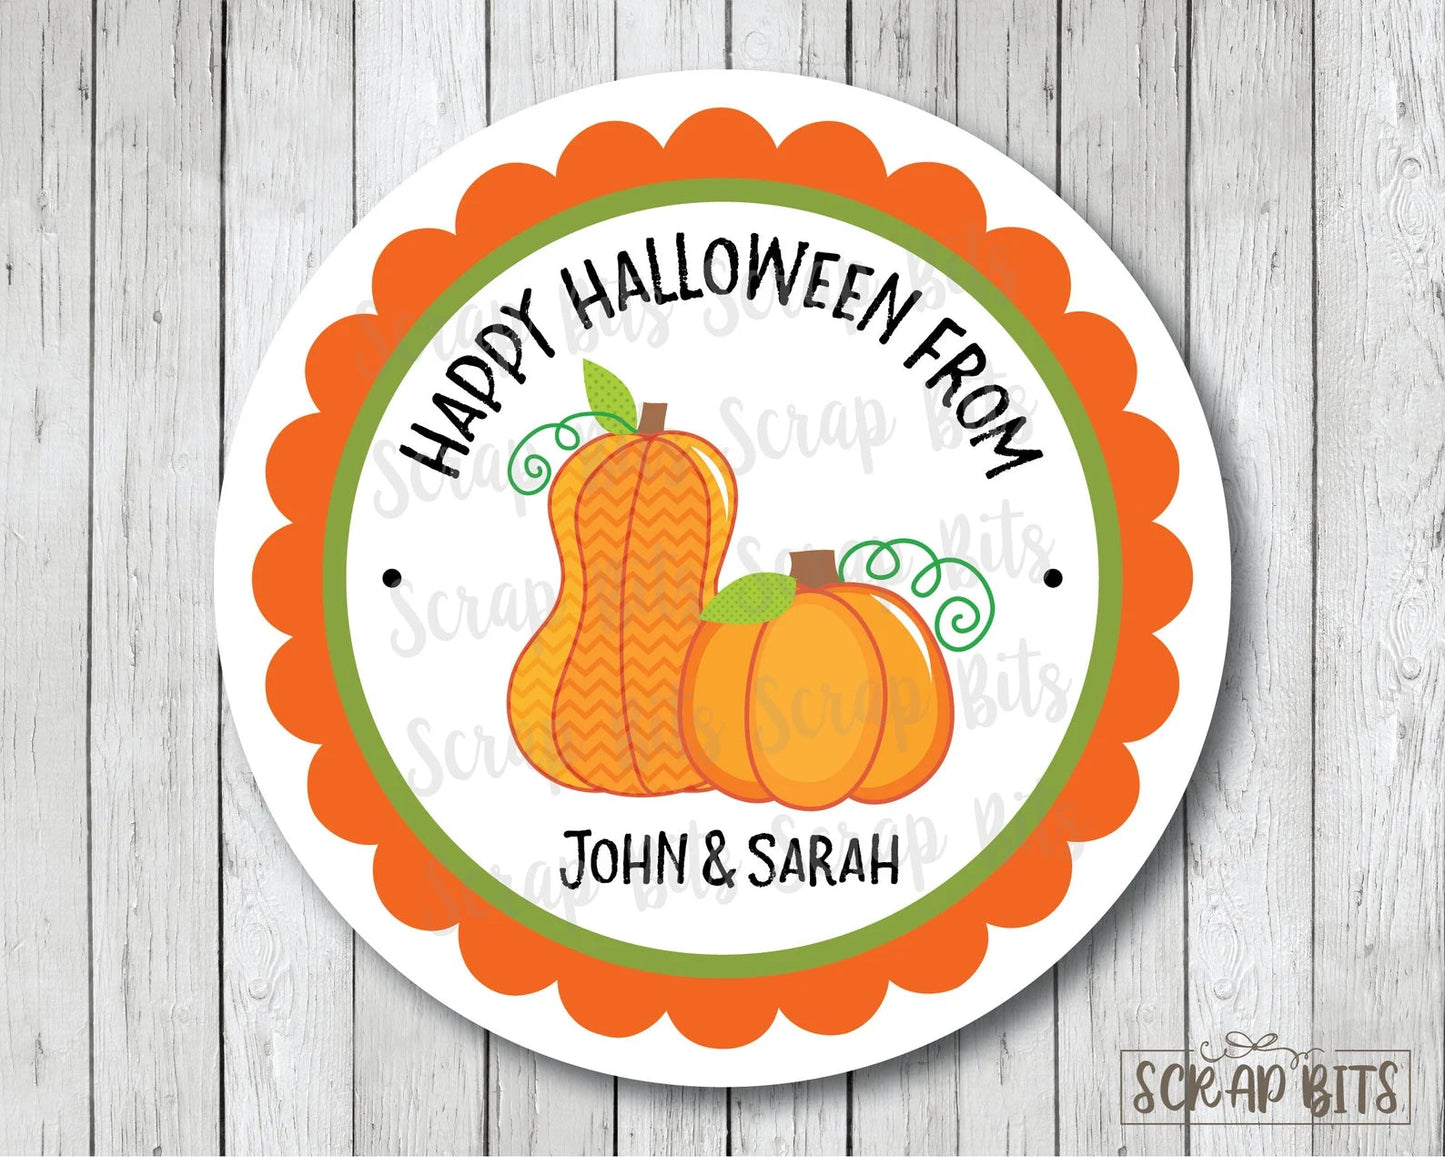 Pumpkin Patch Scallop Halloween Treat Bag Stickers or Tags - Scrap Bits